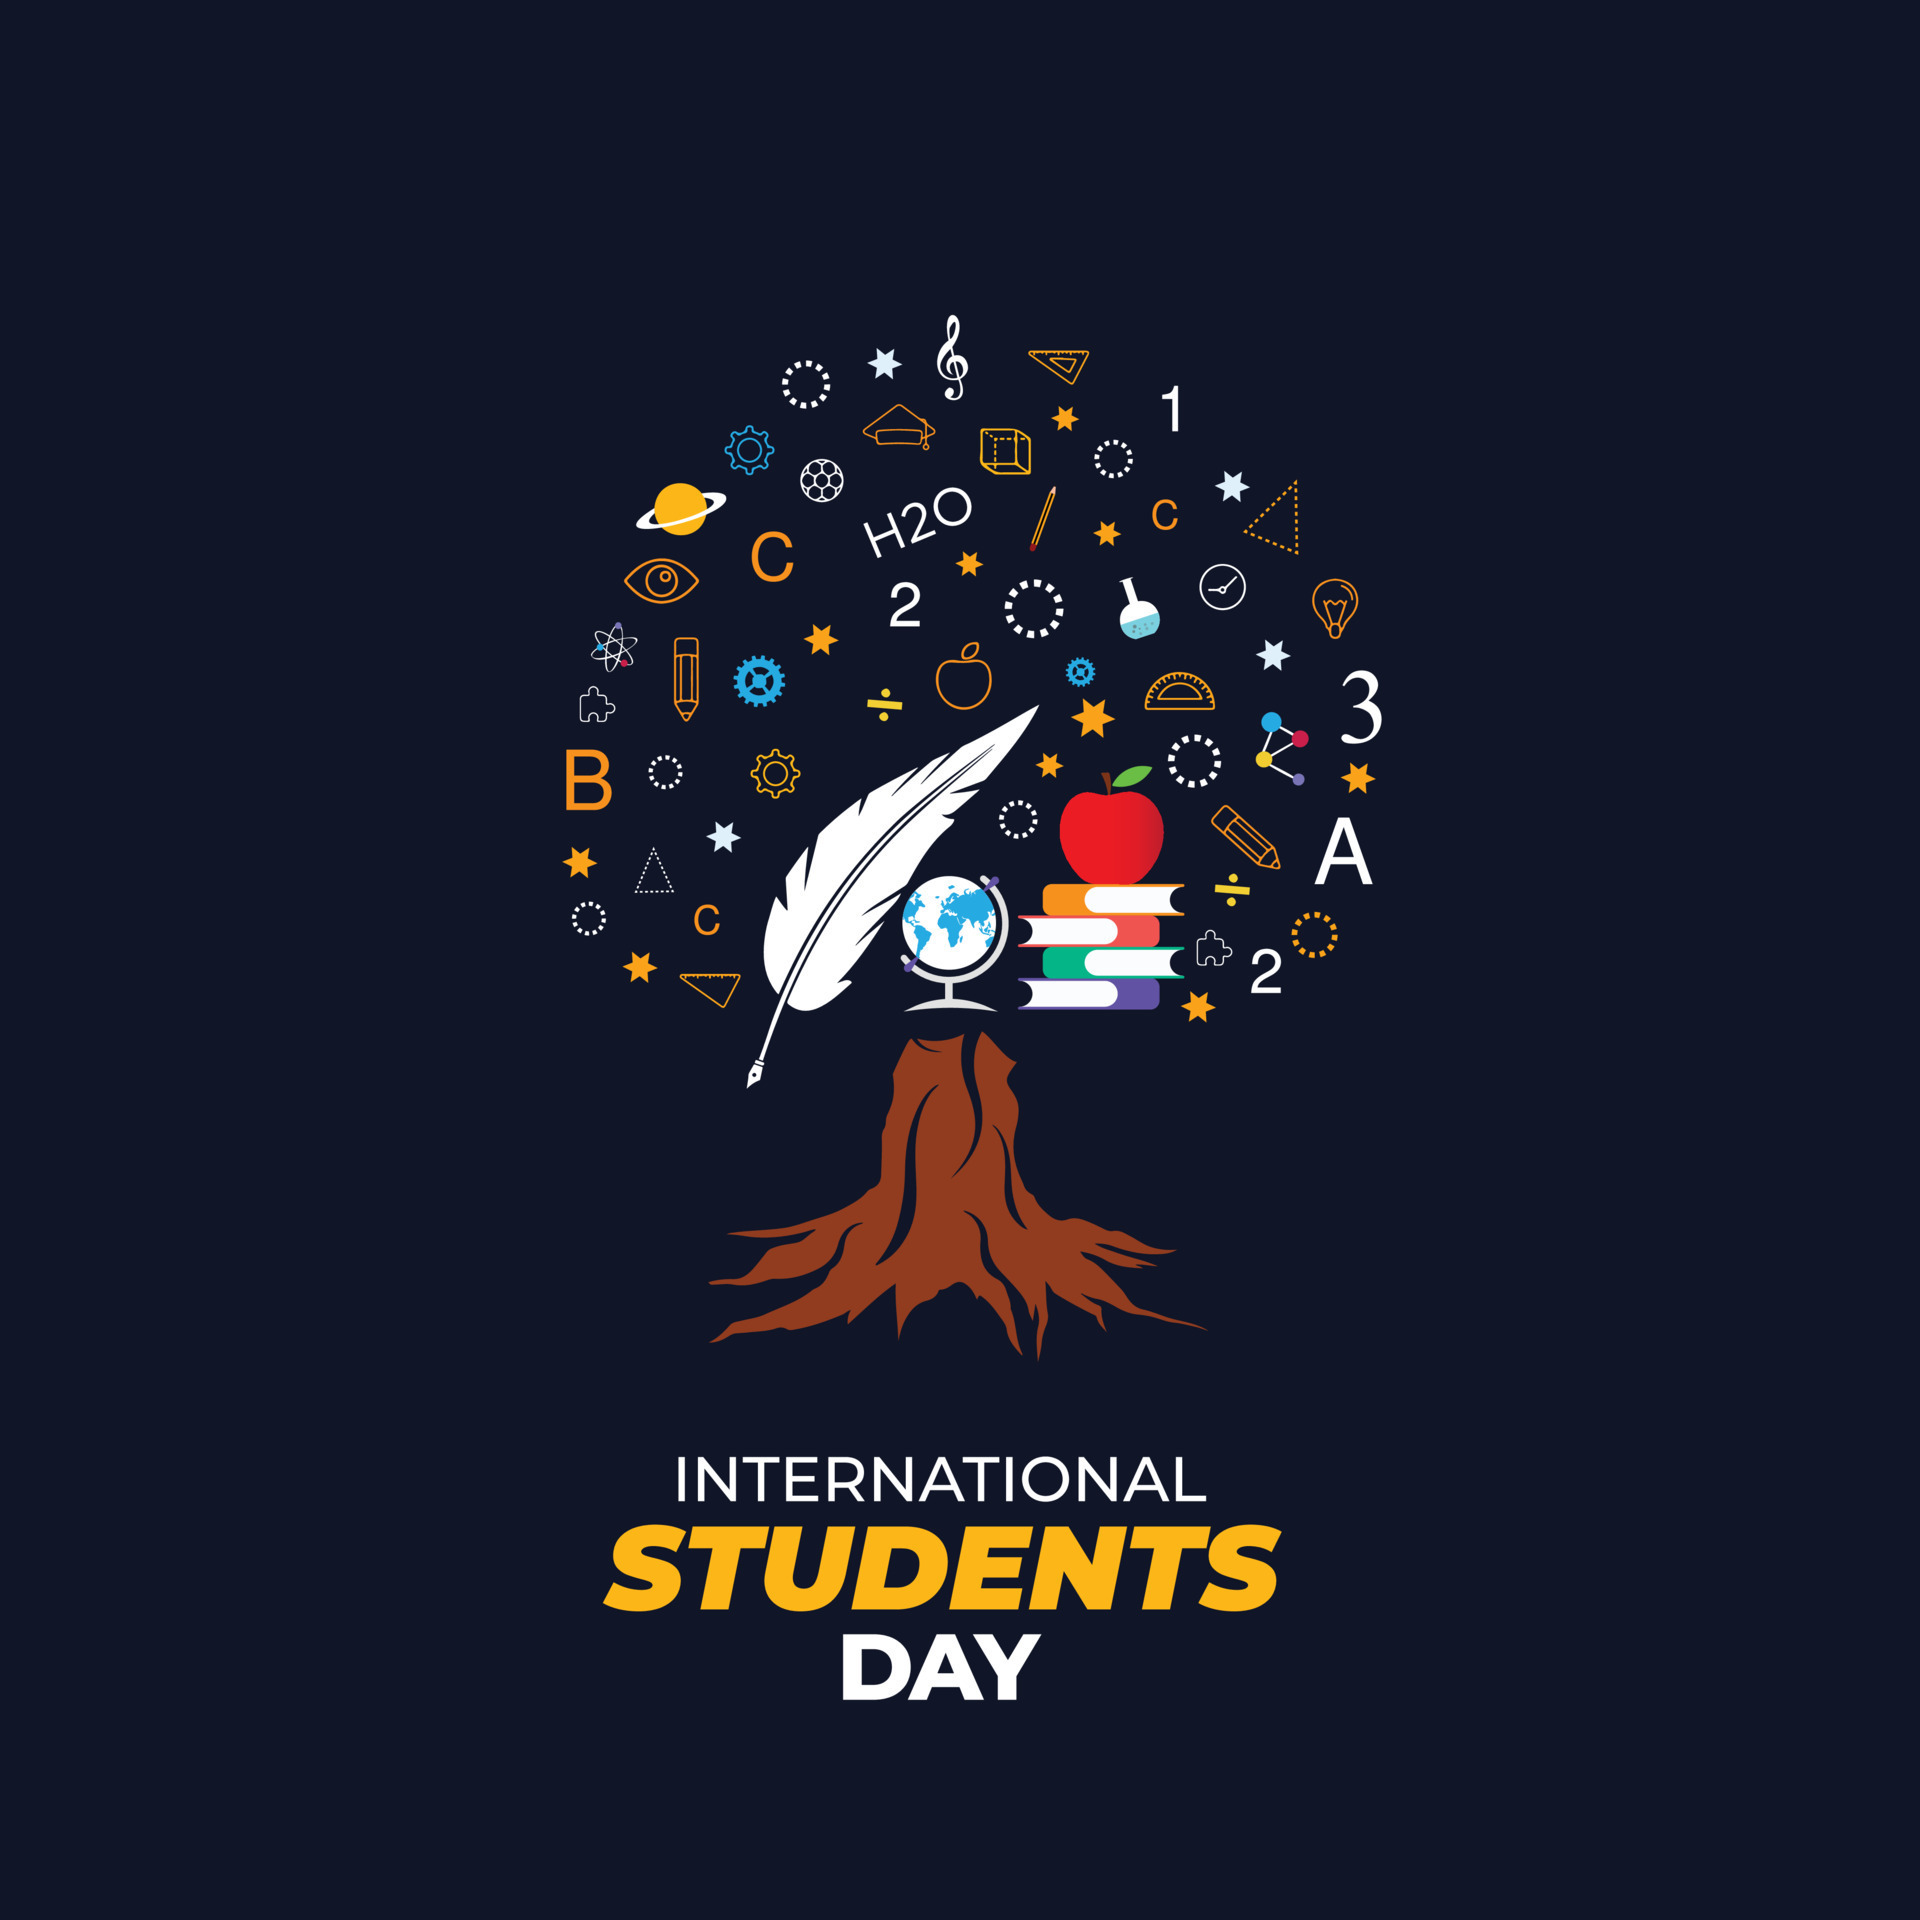 International Students Day. November 17. World students day concept